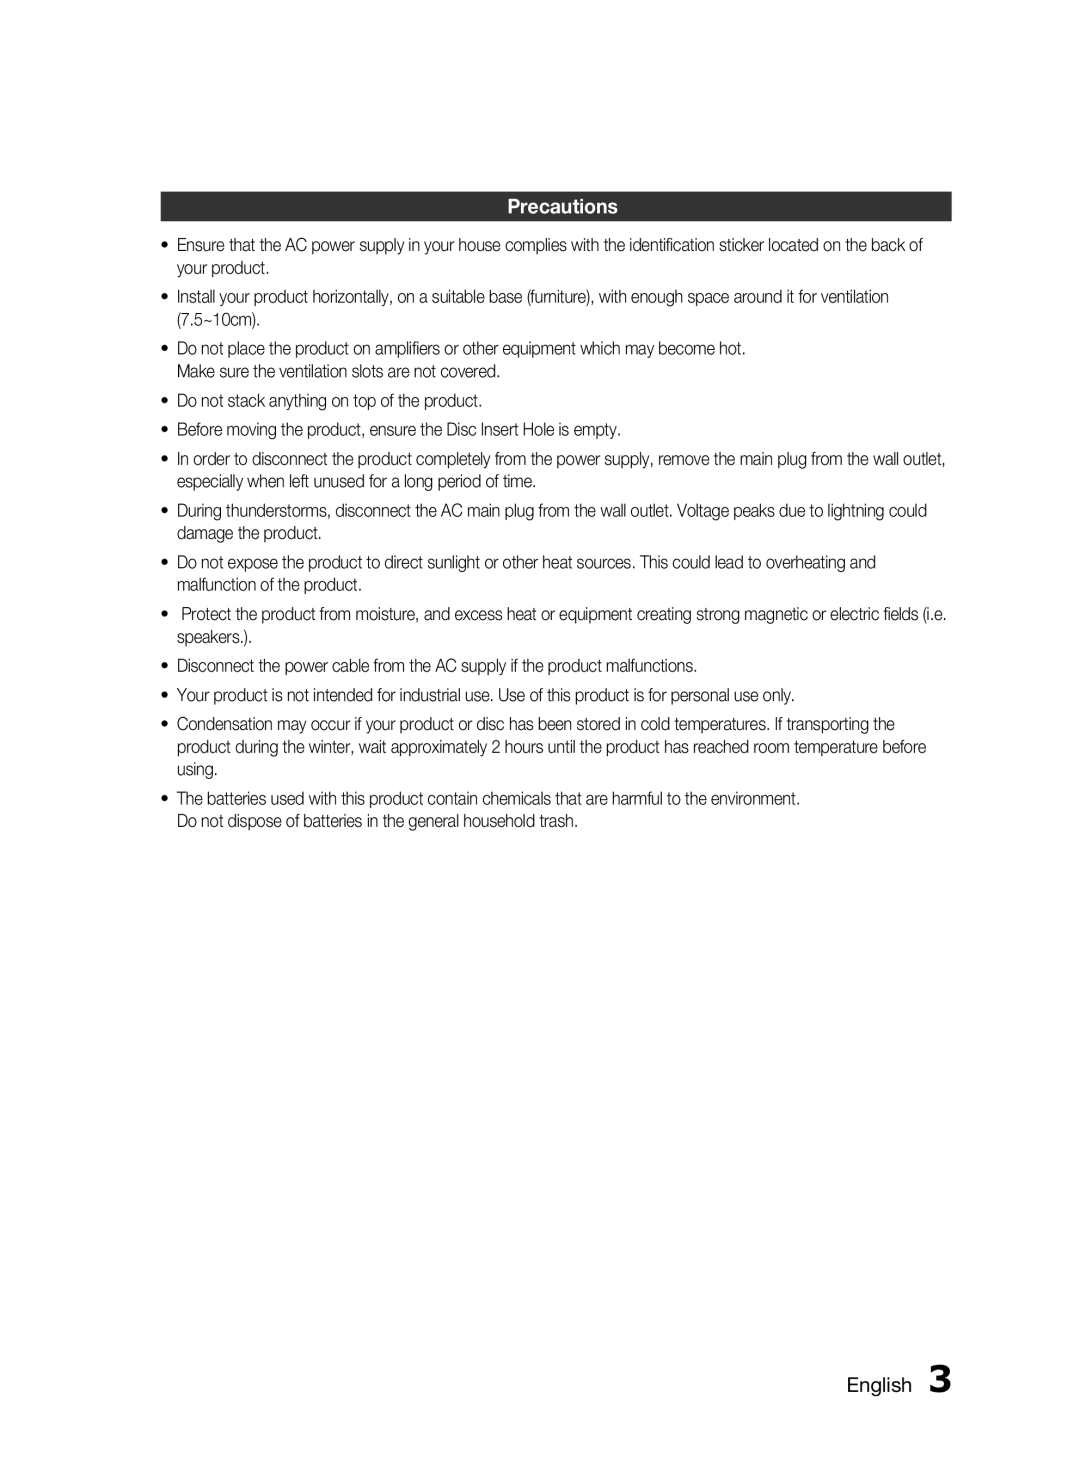 Samsung HT-C5200 user manual Precautions, English 